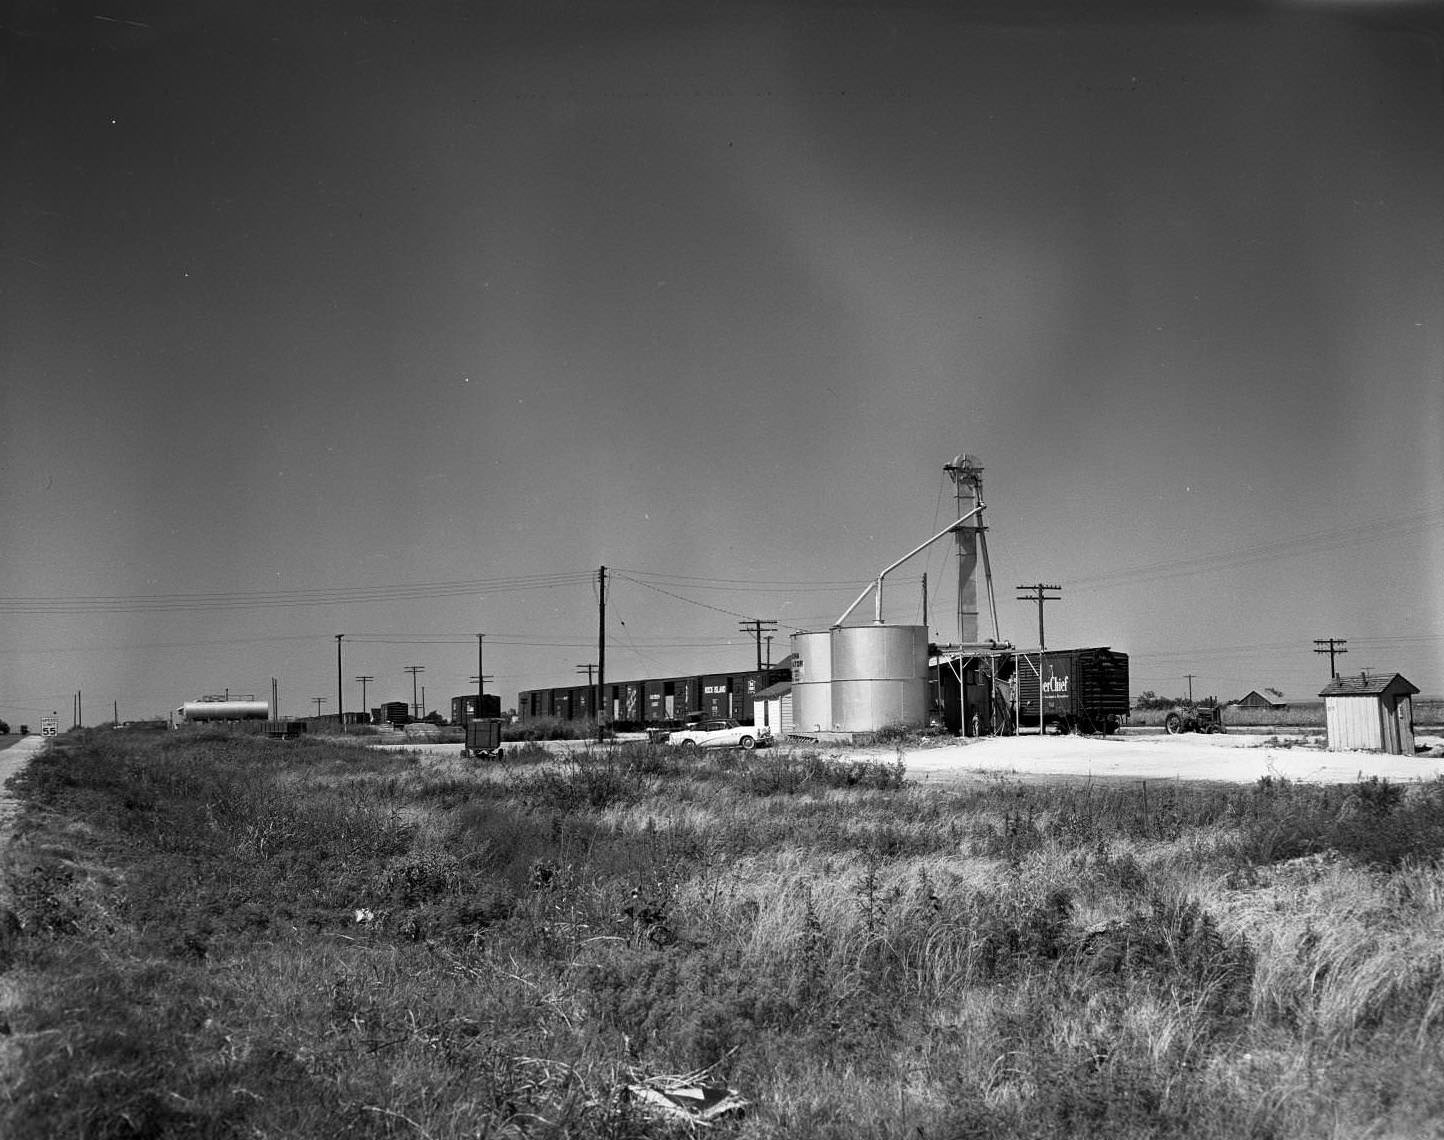 Train and Farm Machinery, 1959